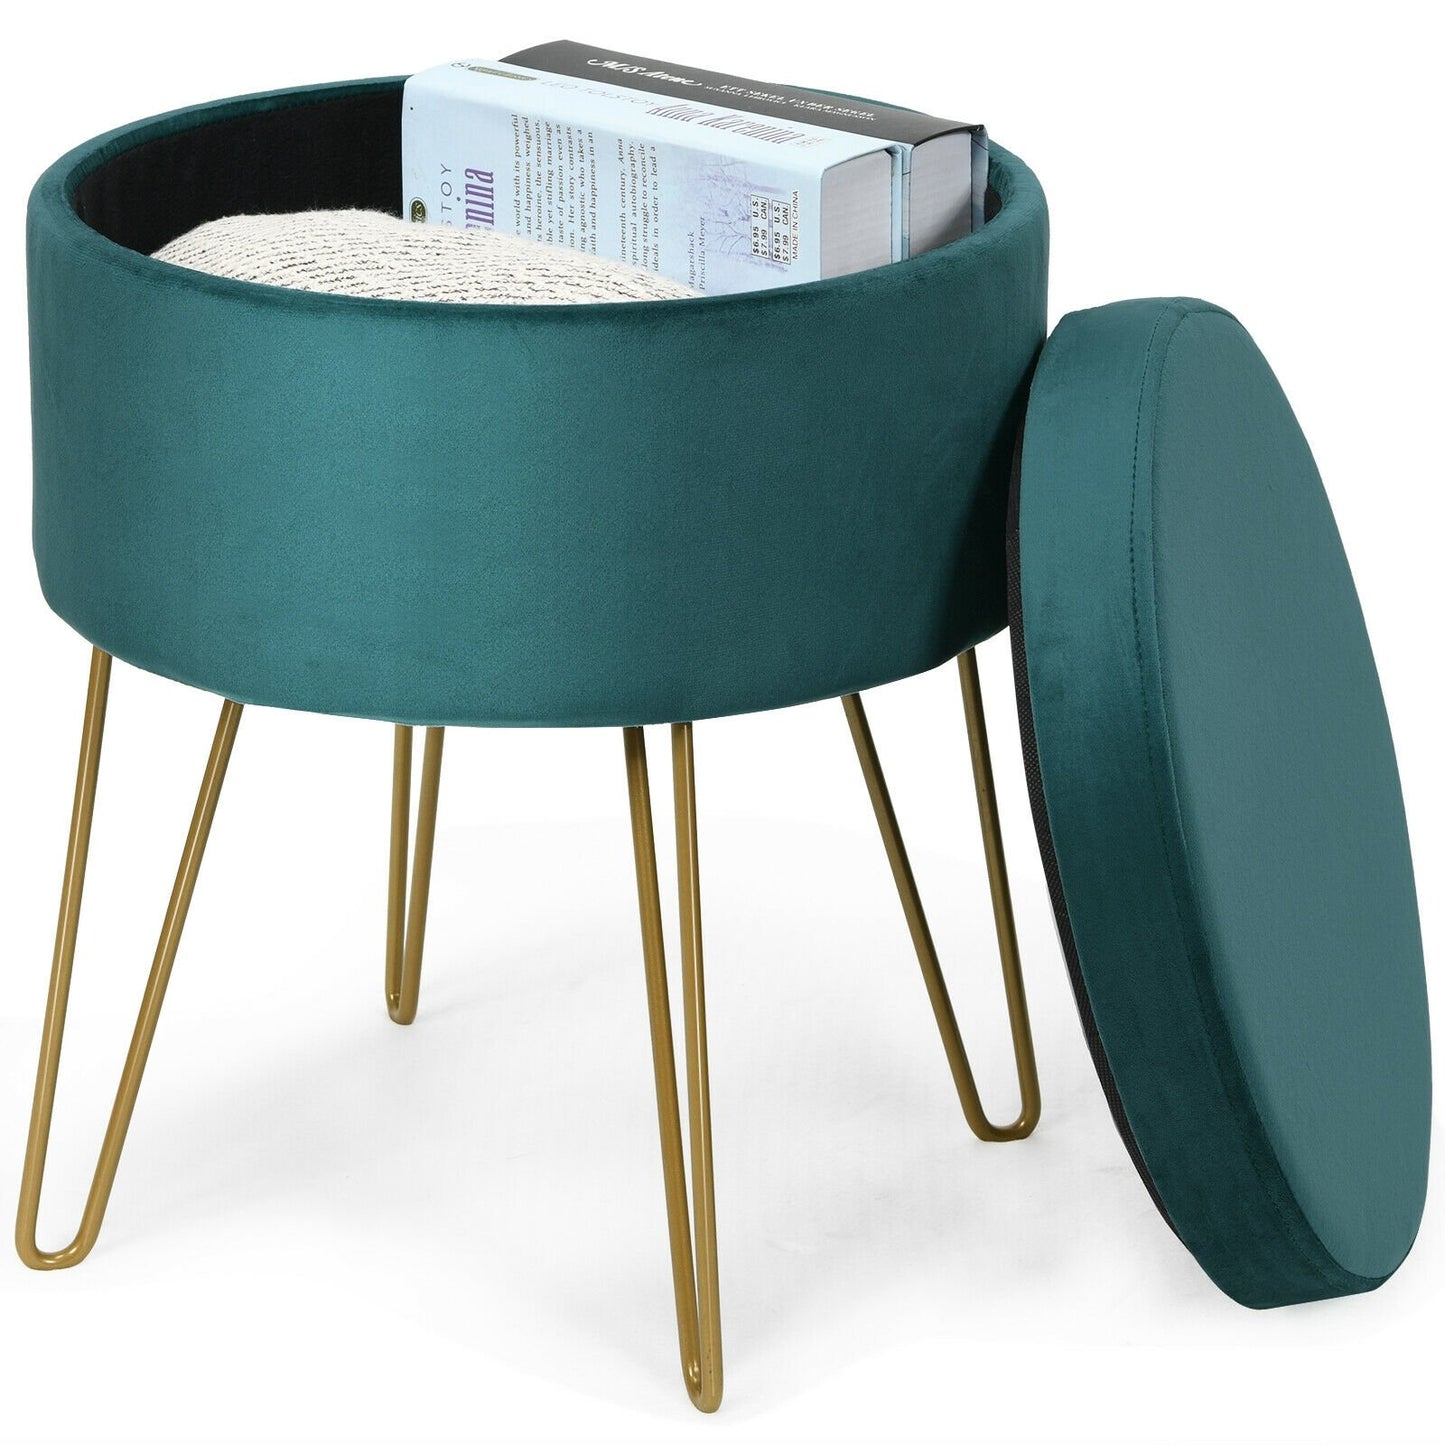 Round Velvet Storage Ottoman Footrest Stool Vanity Chair with Metal Legs, Dark Green - Gallery Canada